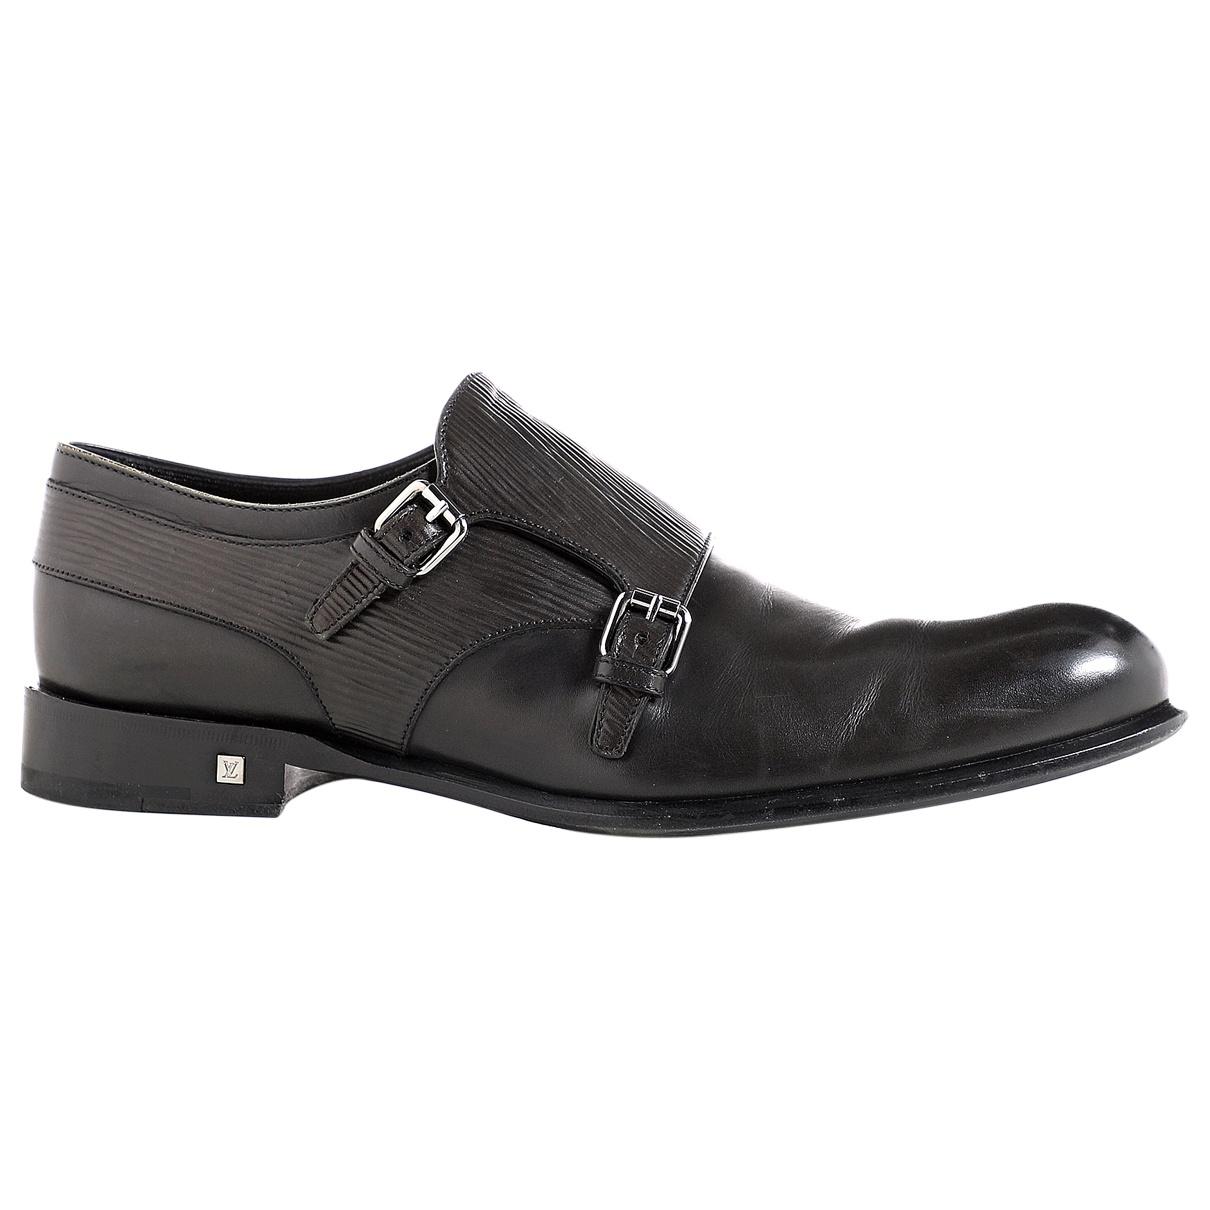 Louis Vuitton Black Leather Flats in Black for Men - Lyst